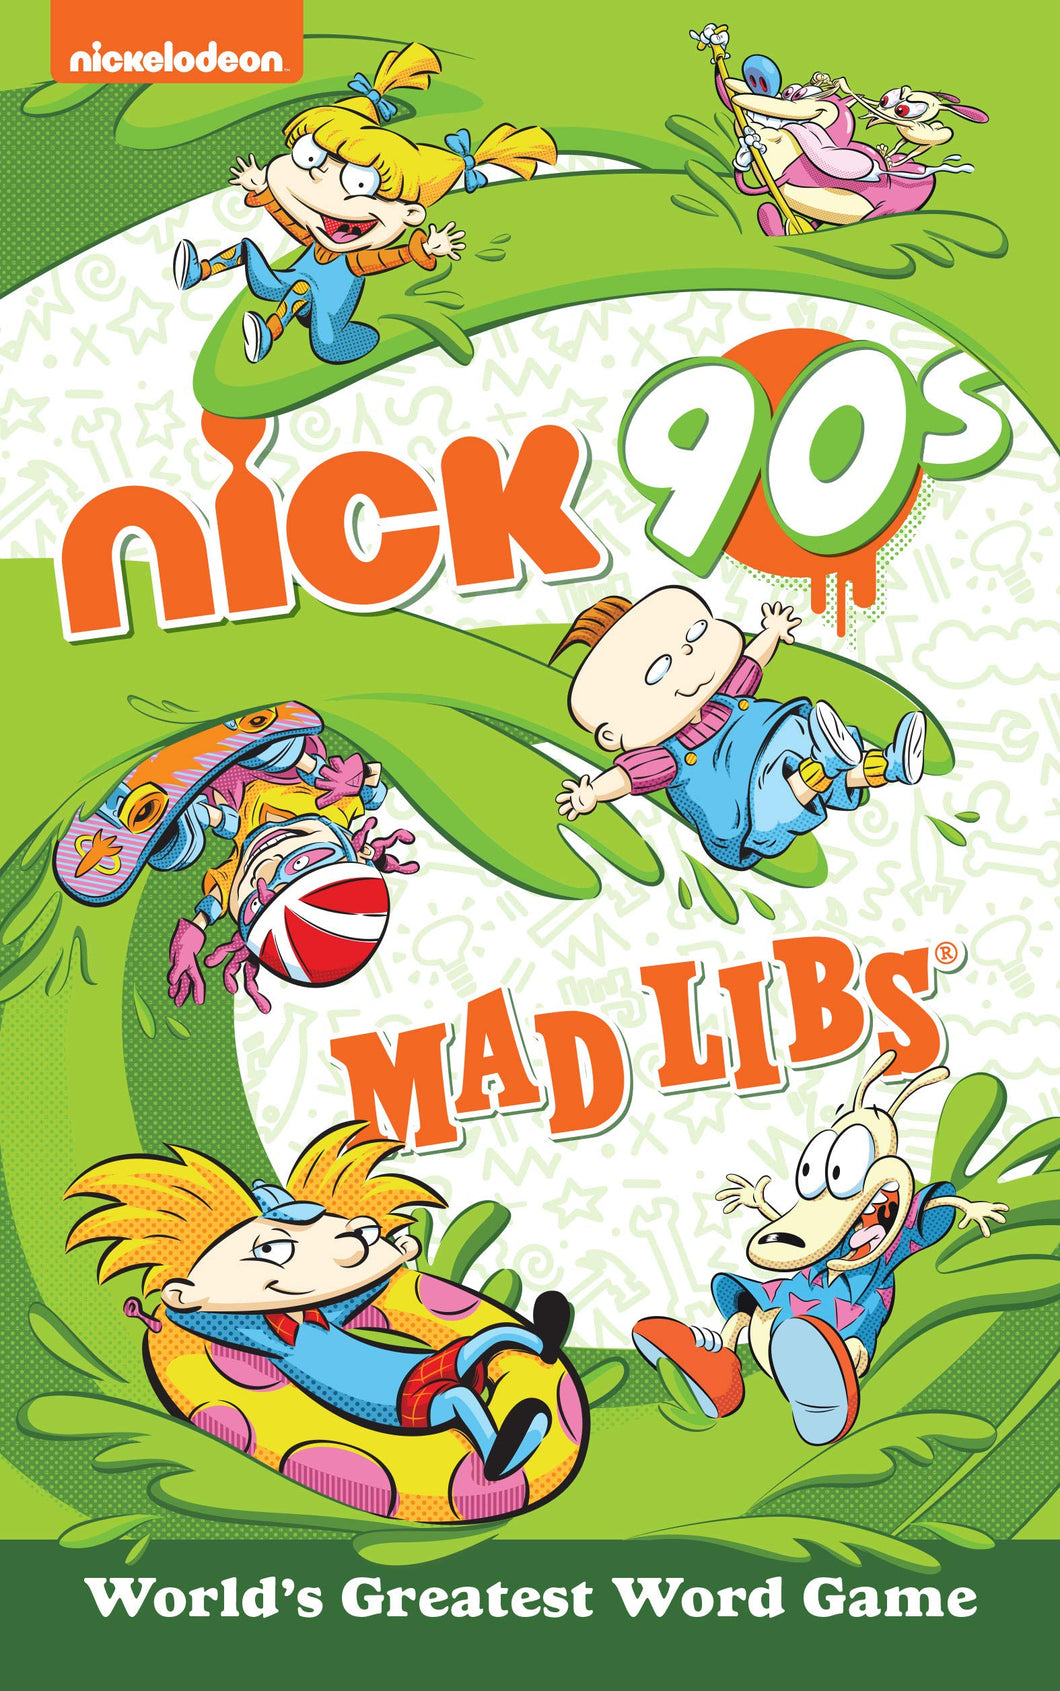 Nick 90s Mad Libs